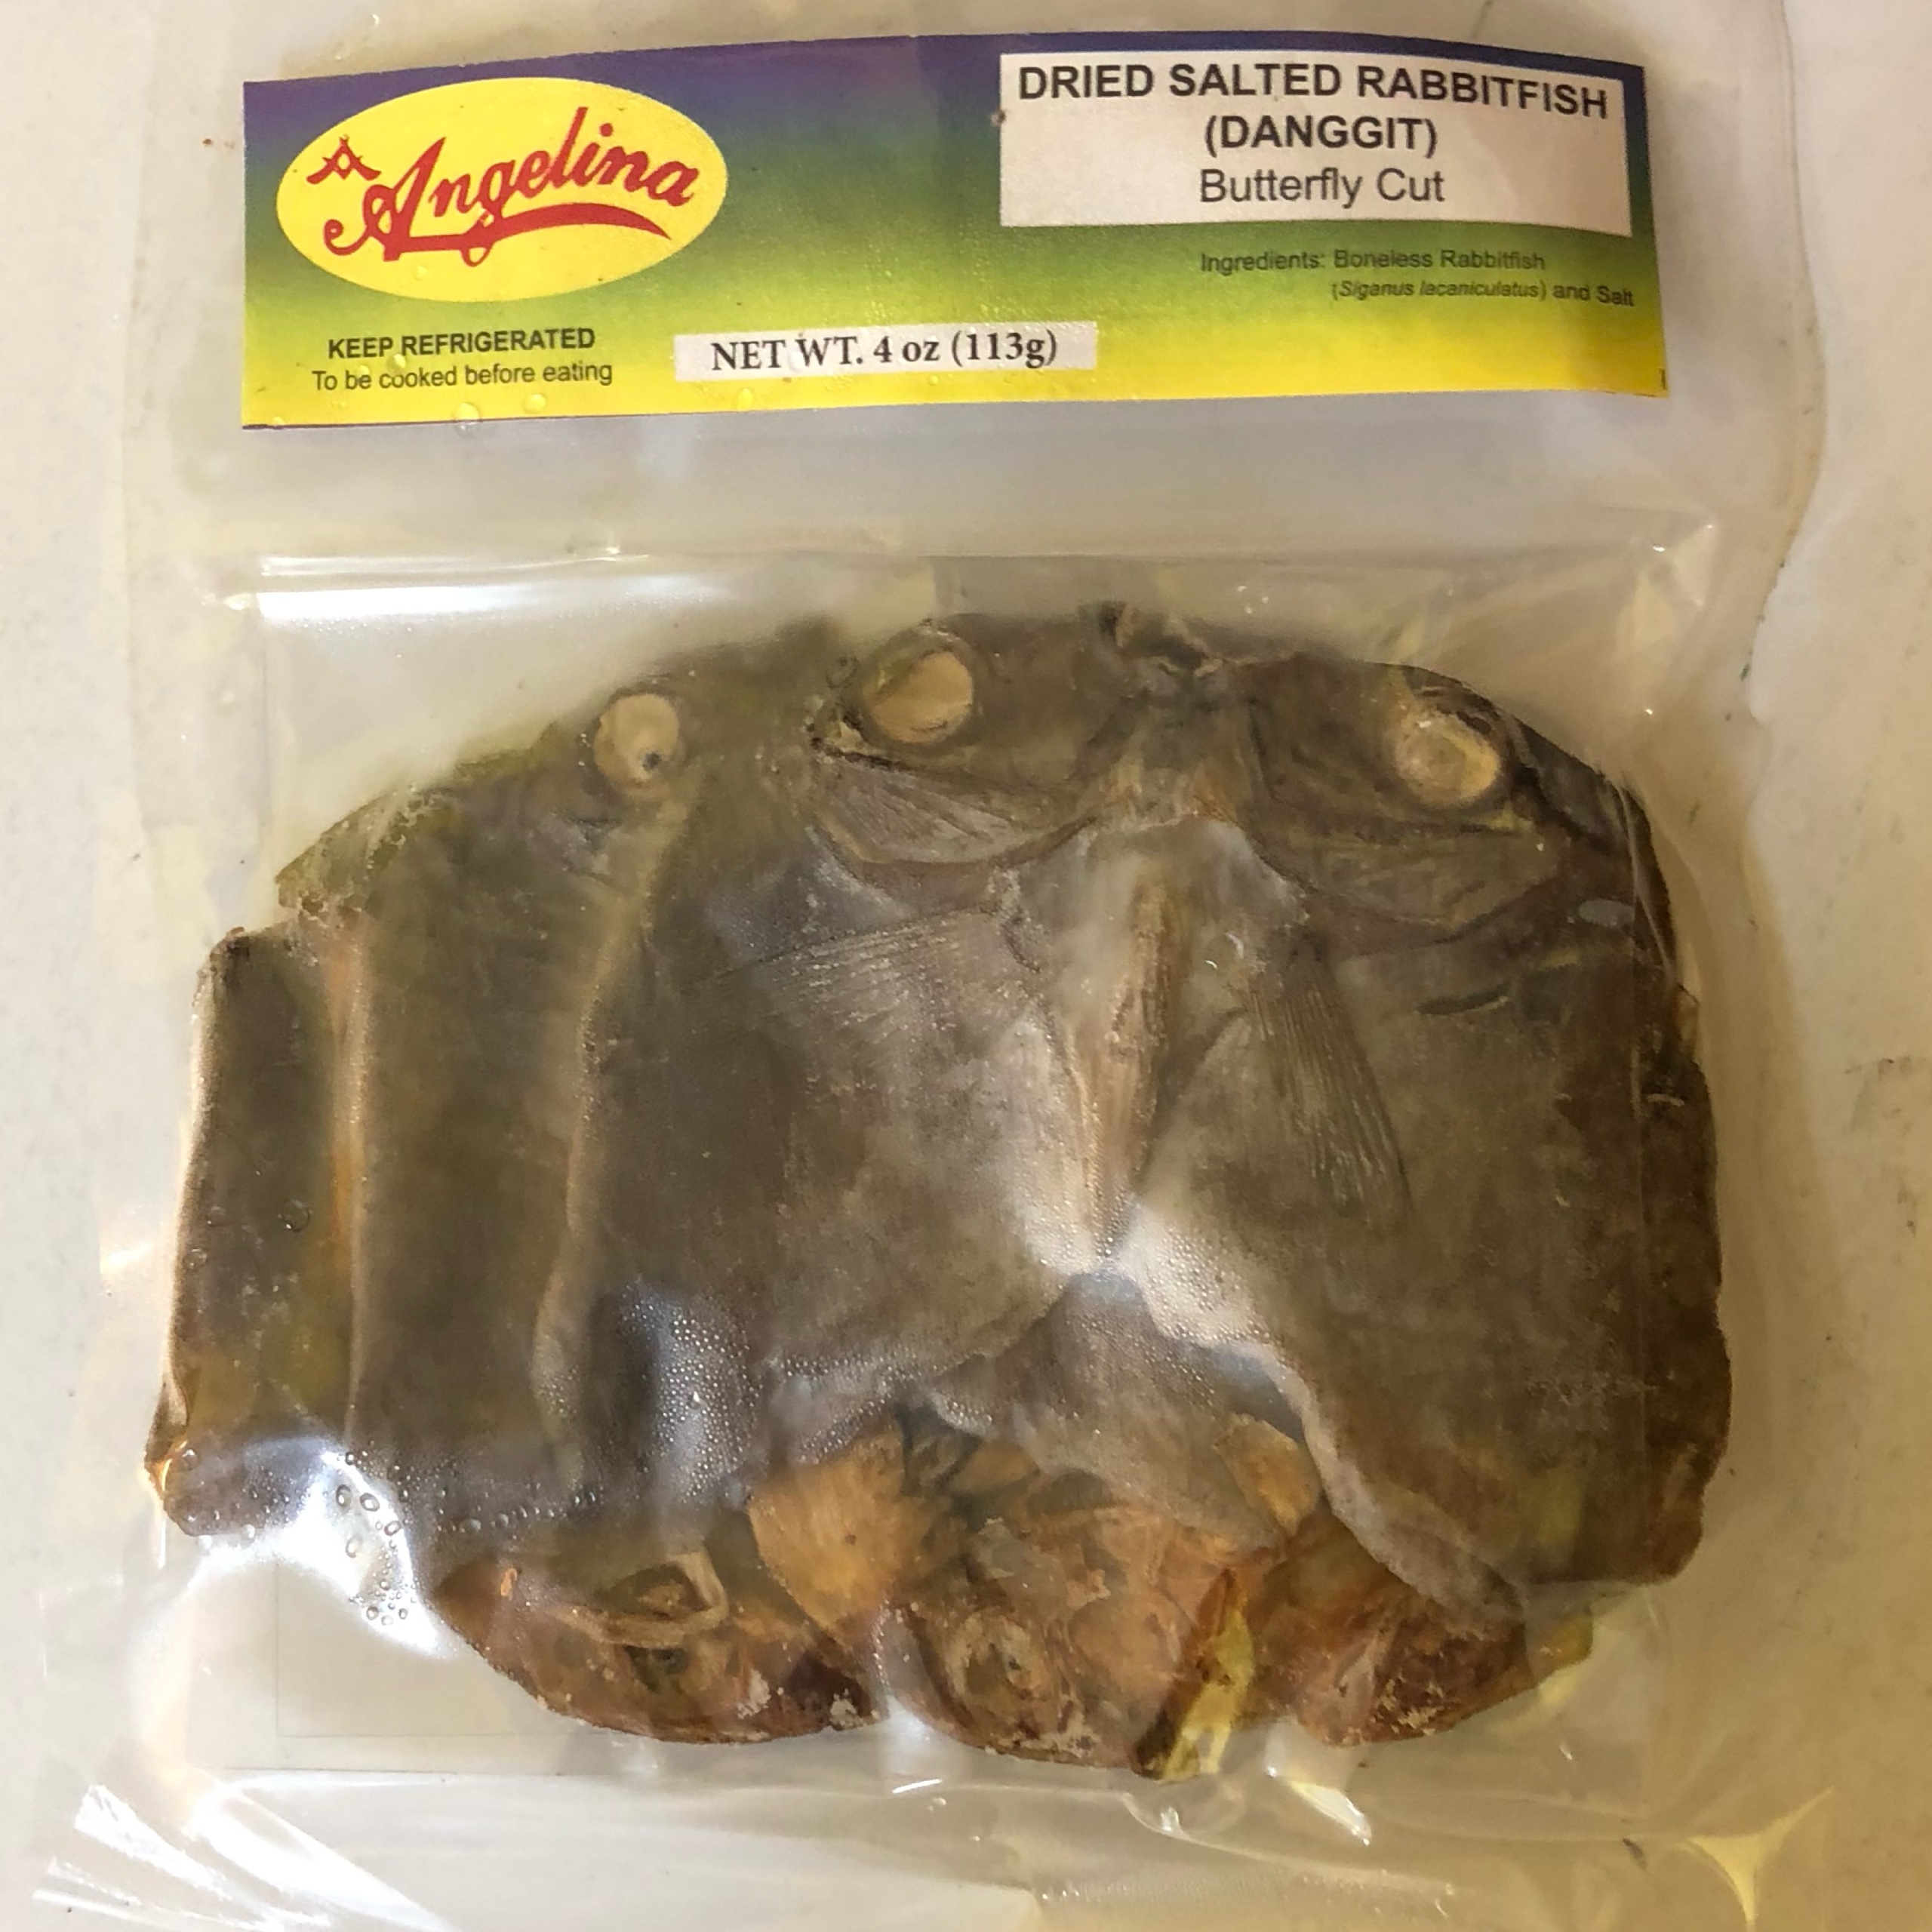 Angelina Dried Salted Rabbitfish Danggit Vmart Filipino Store